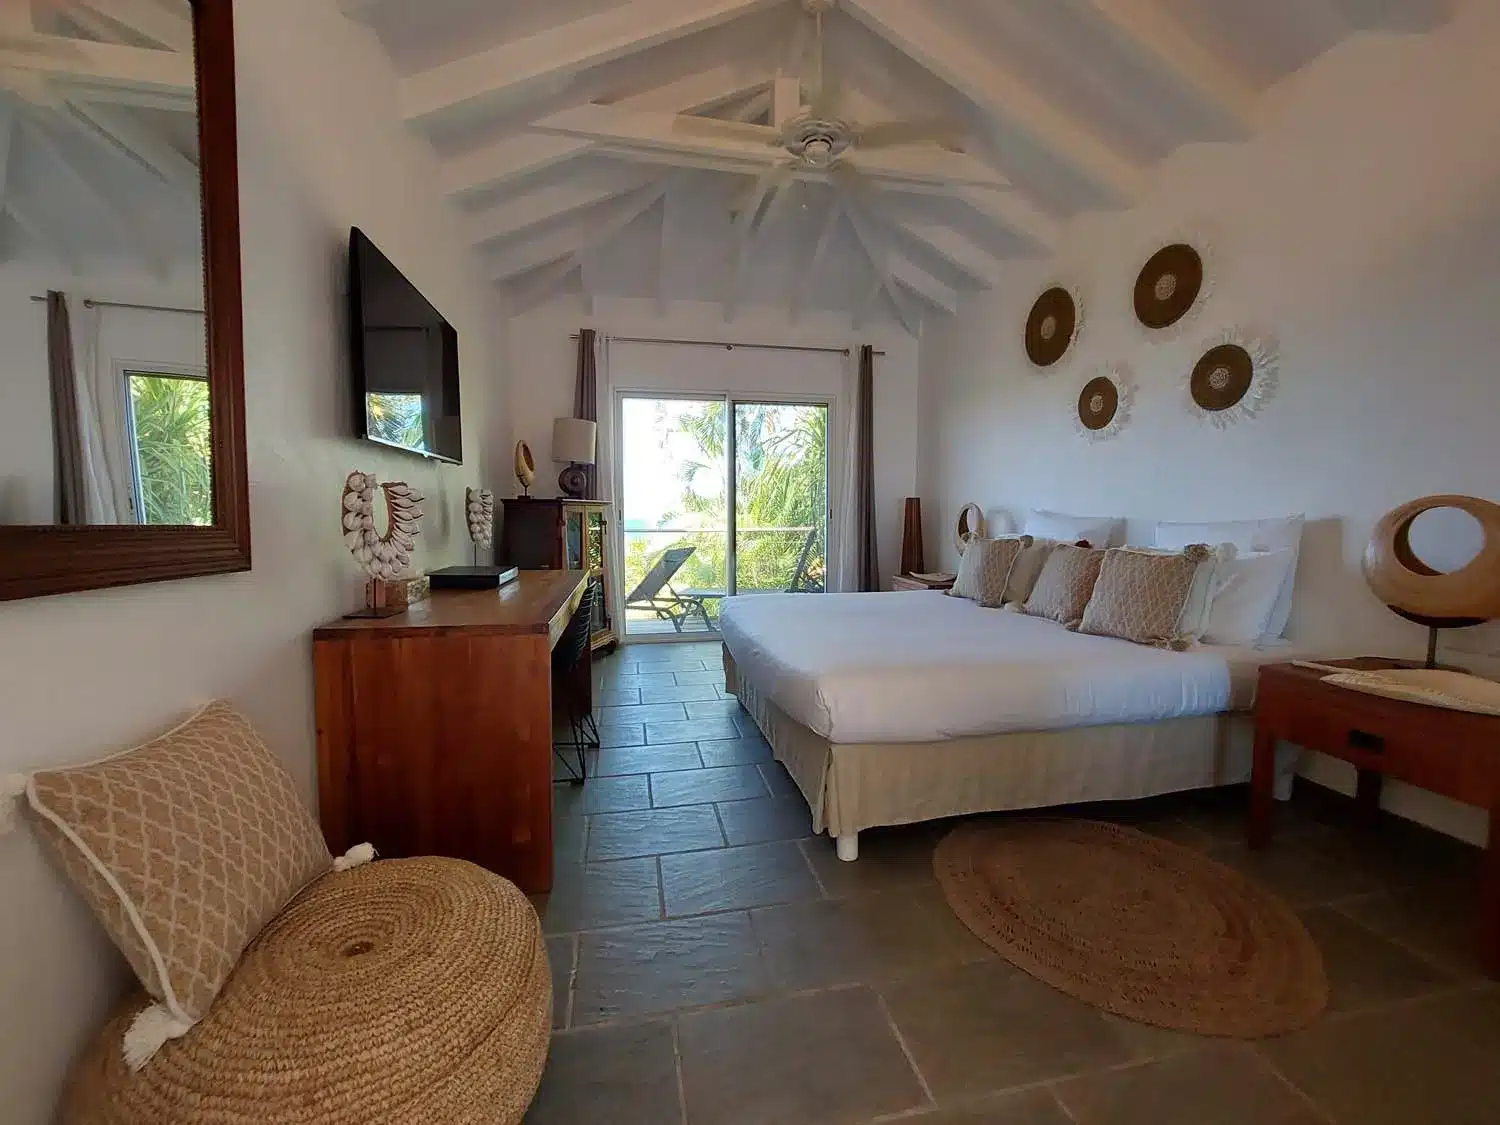 Bedroom in Milonga villa - luxury villa for rent in St Barts